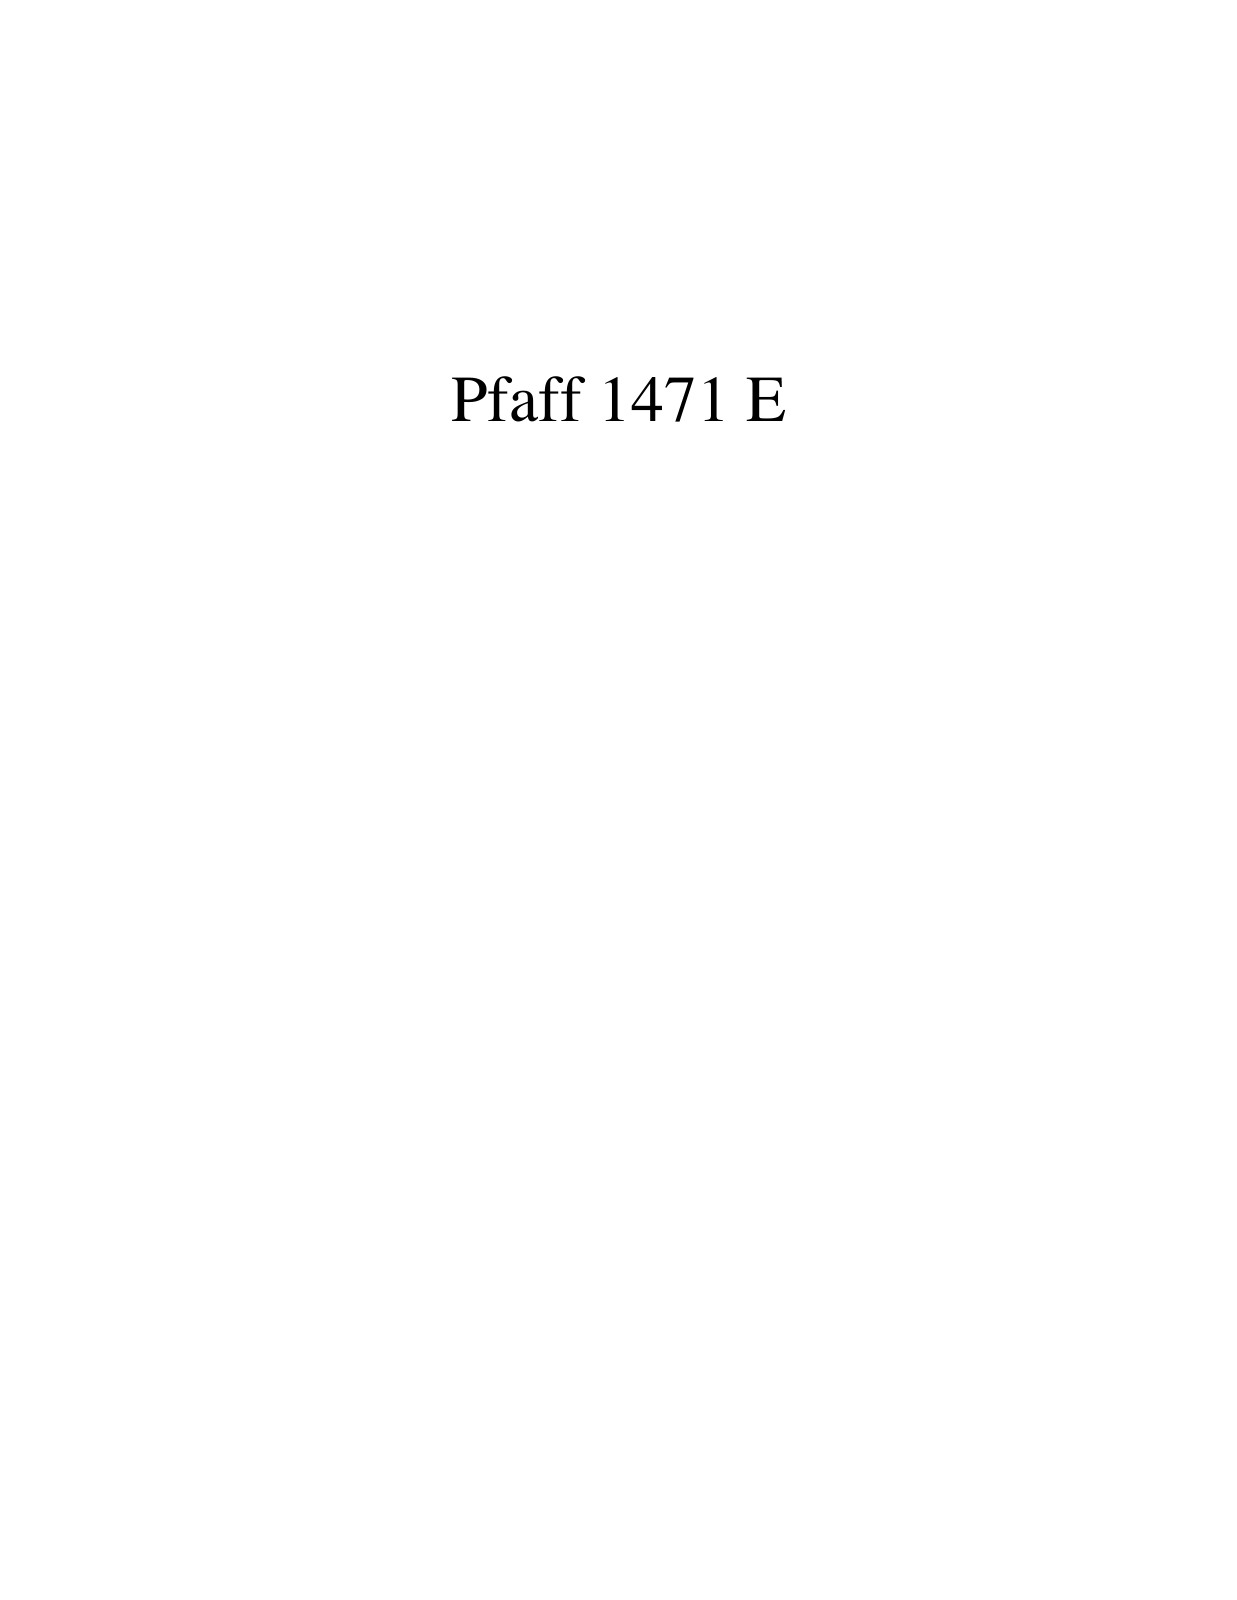 PFAFF 1471 E Parts List